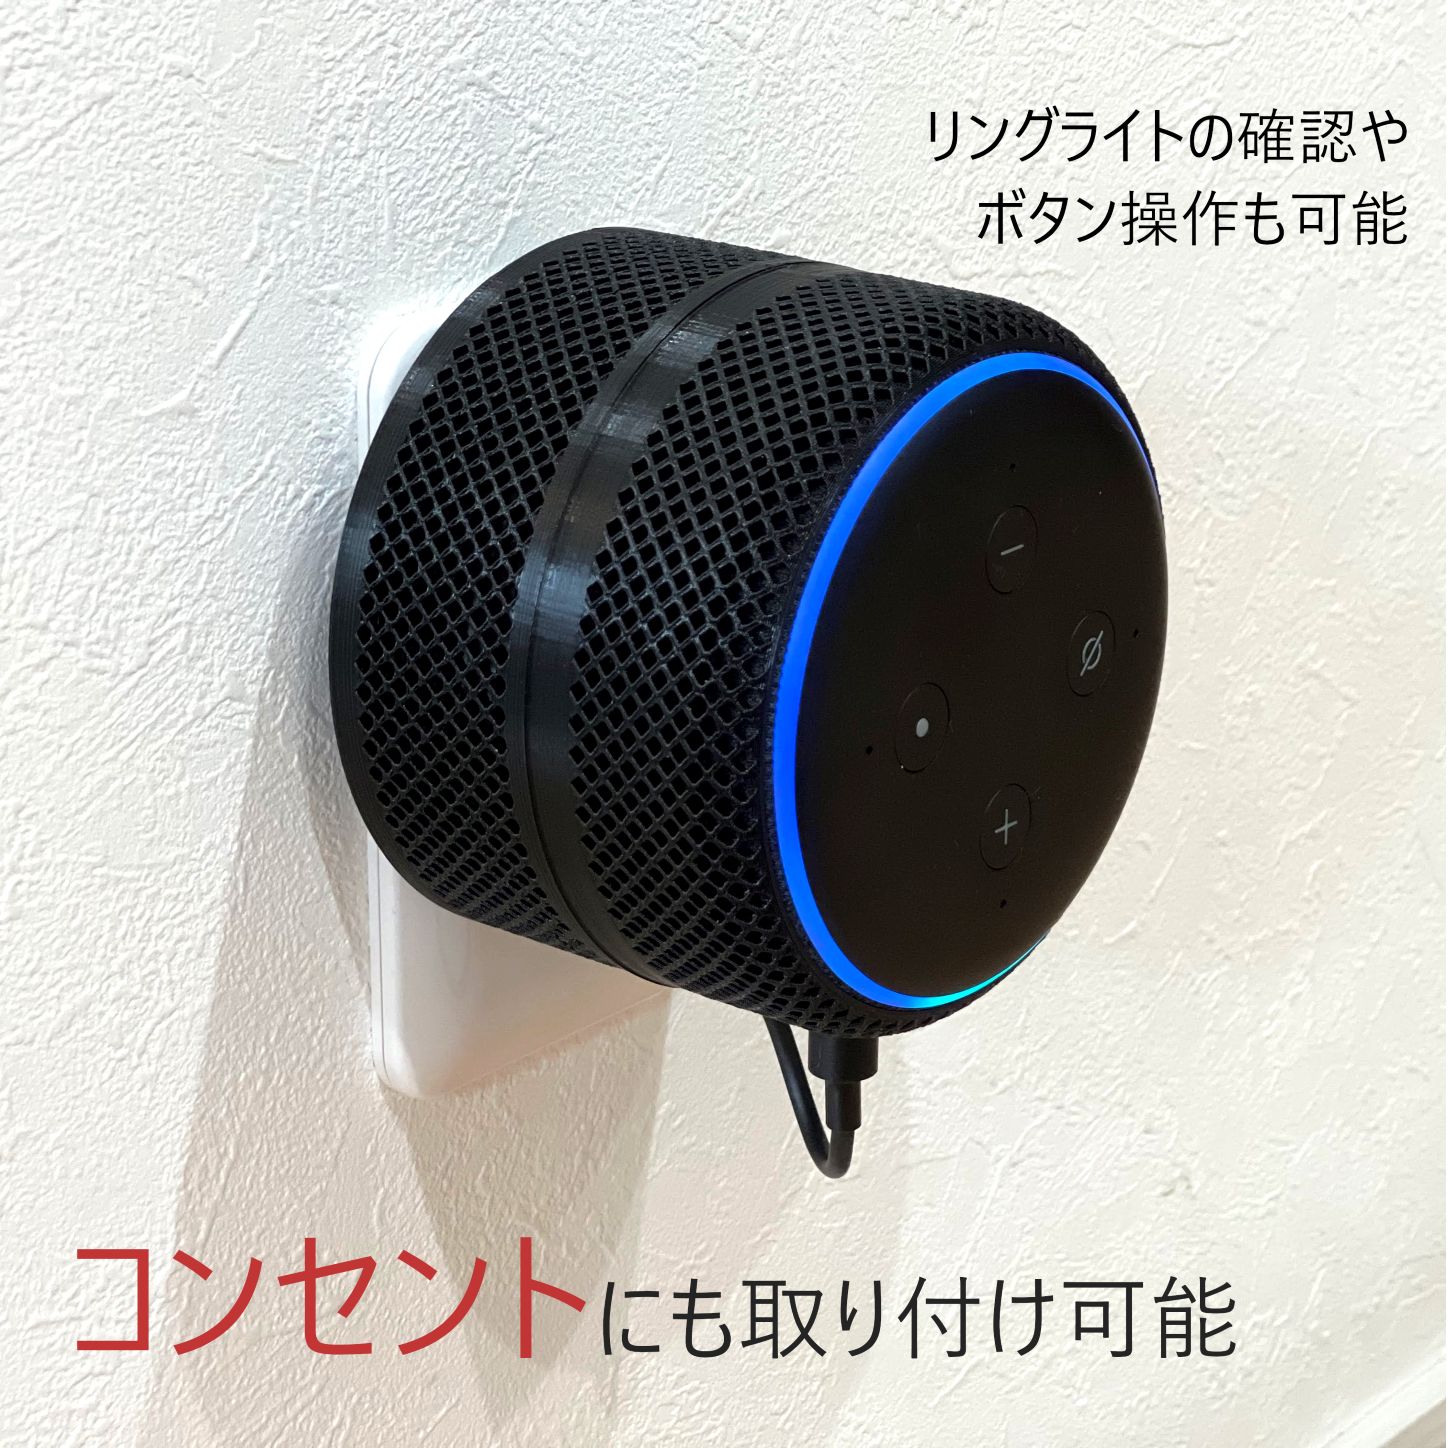 Amazon Echo Dot 第3世代 ライティングレール取付ユニット - メルカリ